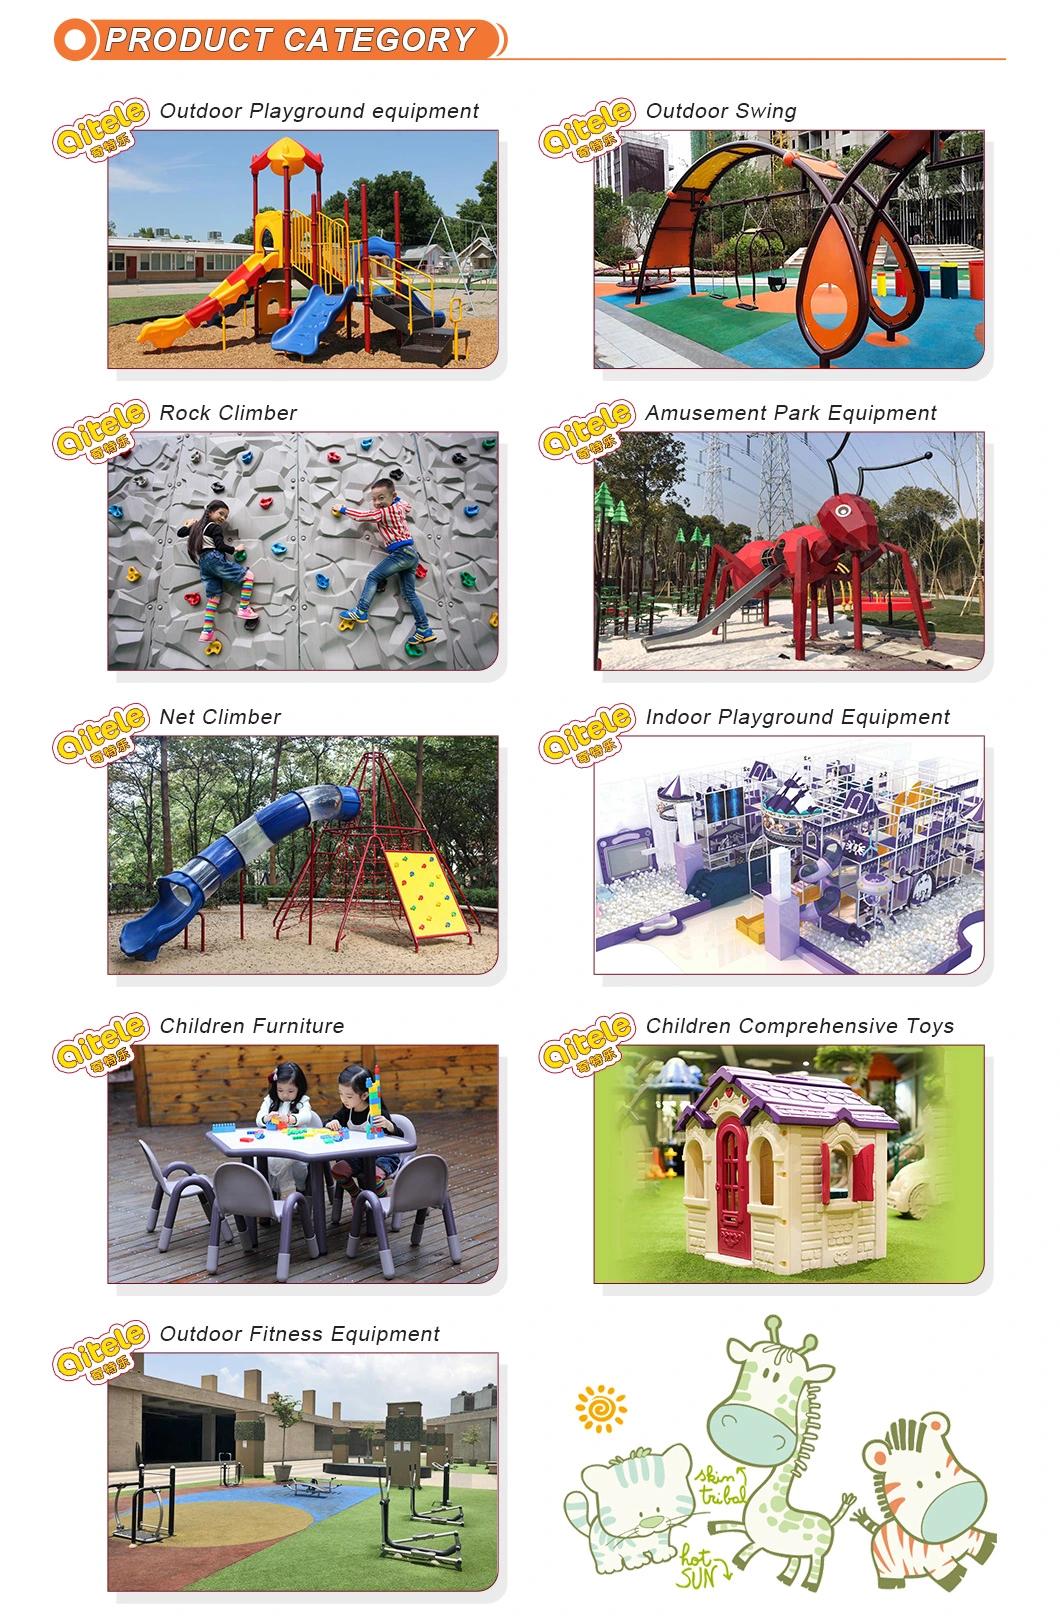 114mm Galvainze Post Outdoor Playground Equipment with Slide